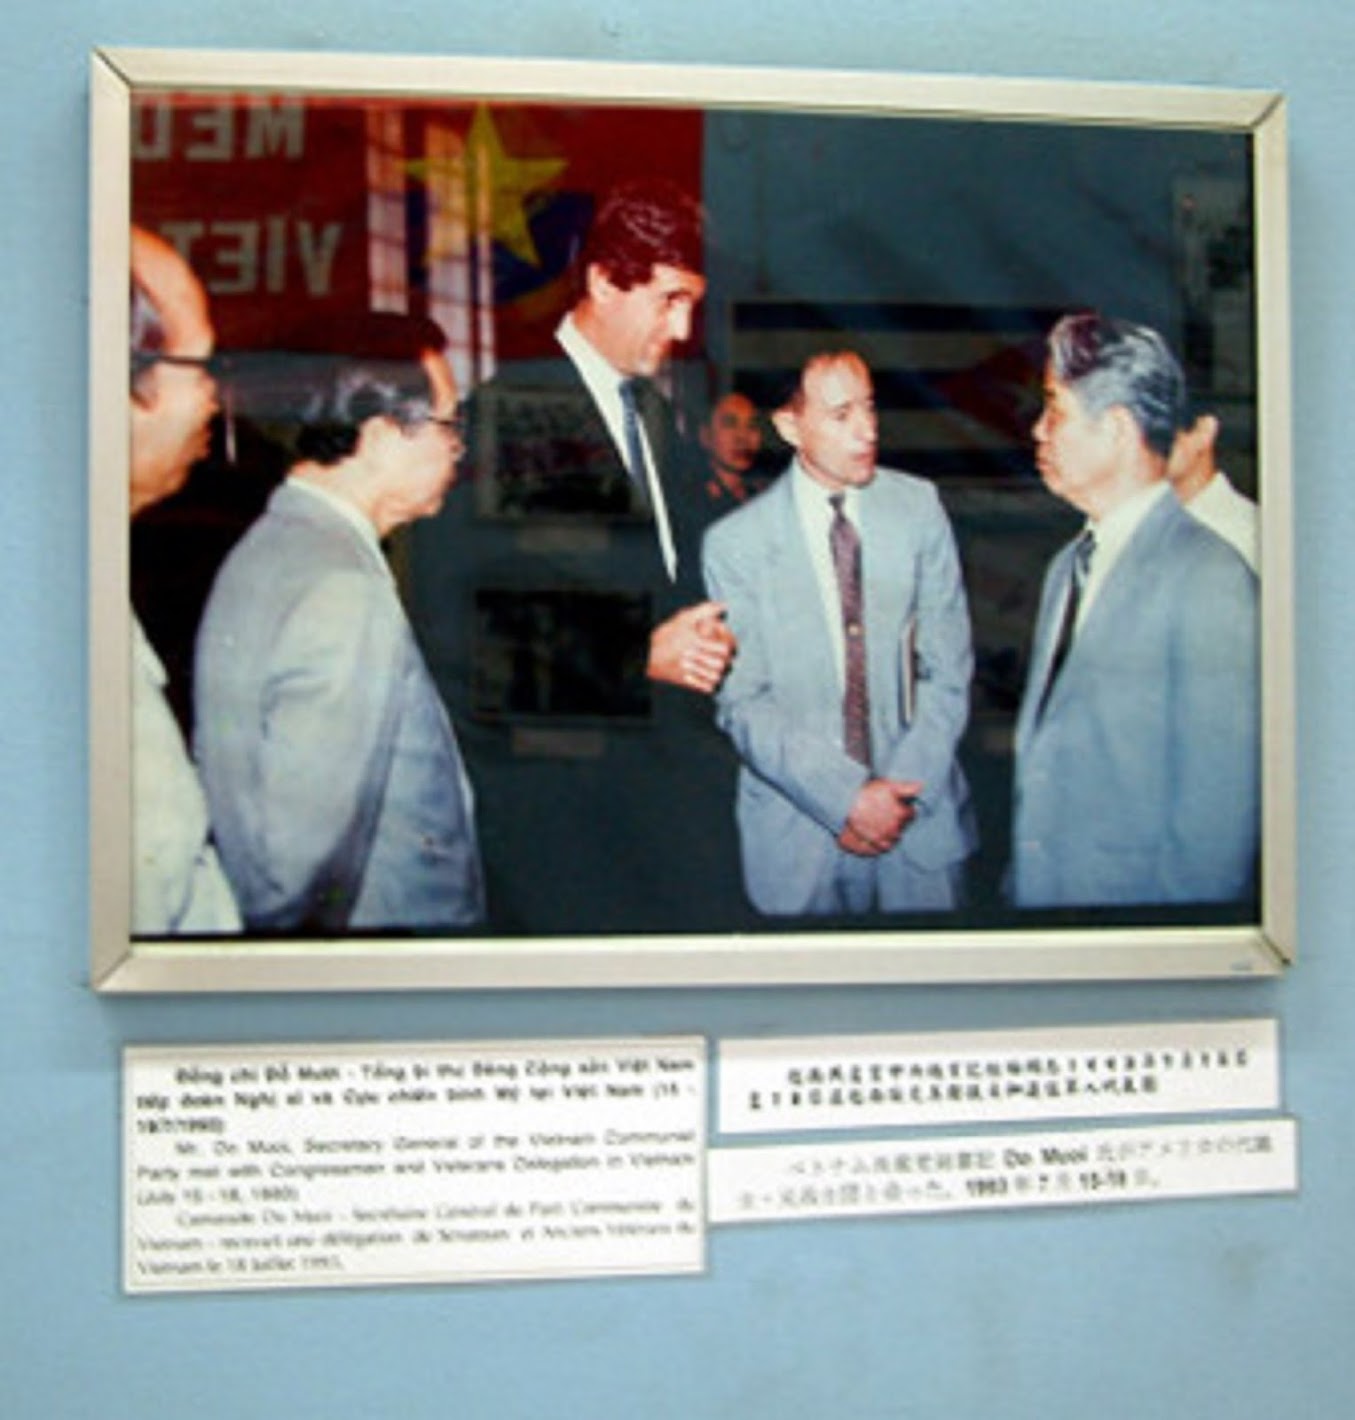 JOHN KERRY'S HEROS MUSEUM FOR THE VIET CONG IN HANOI, VIETNAM